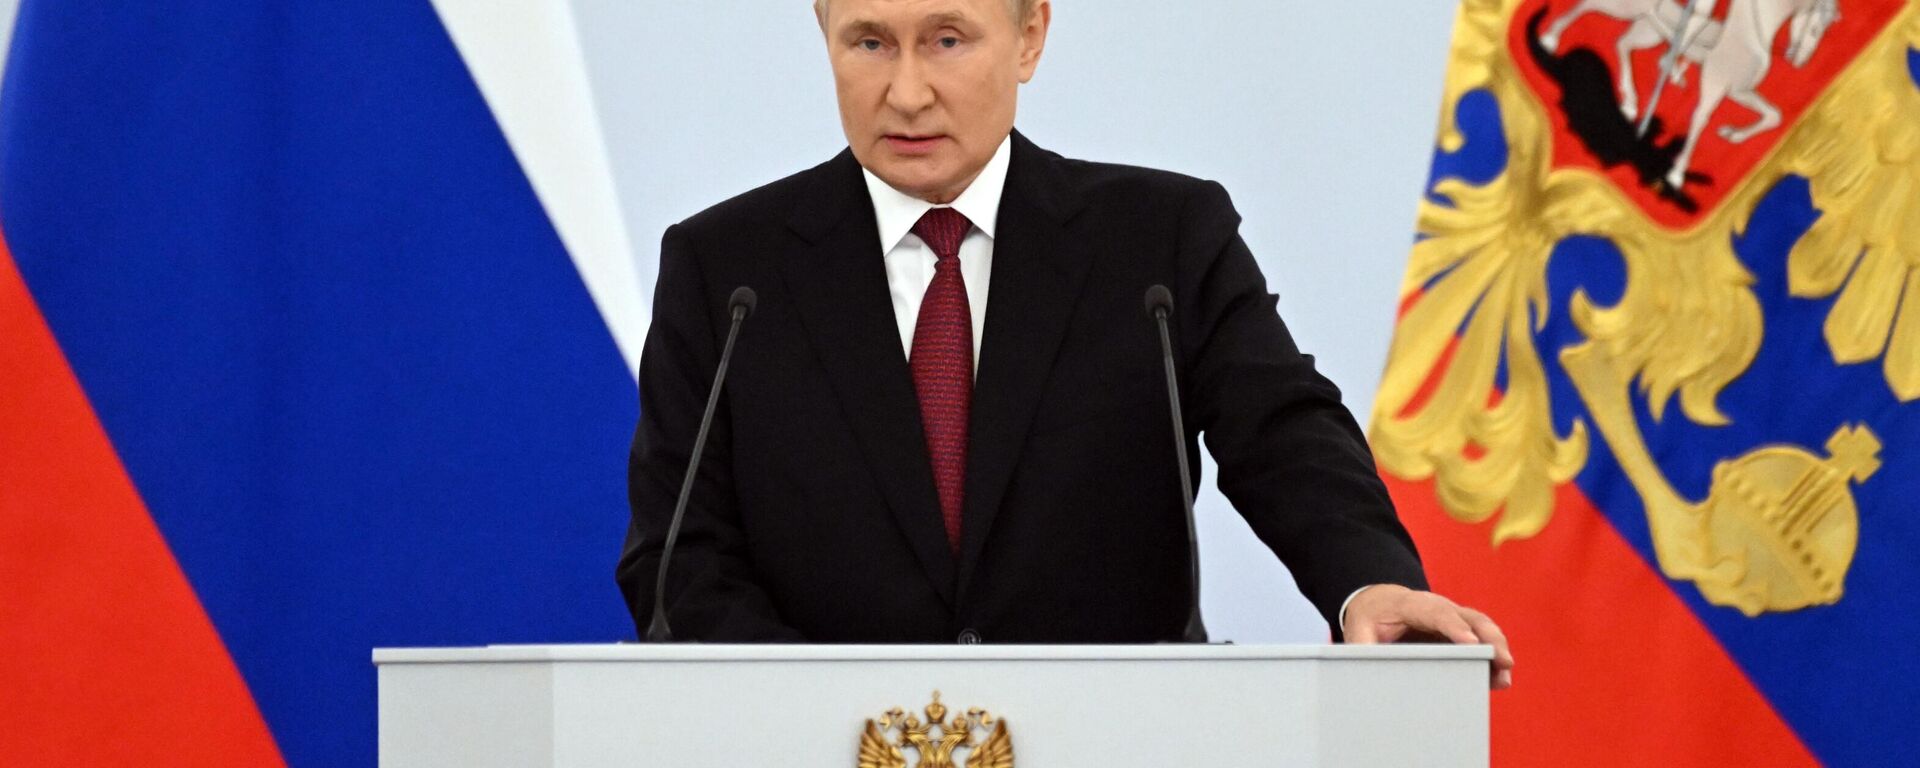 Vladimir Putin Speaks at Ceremony on Accession of New Territories Into Russia - Sputnik International, 1920, 16.12.2022